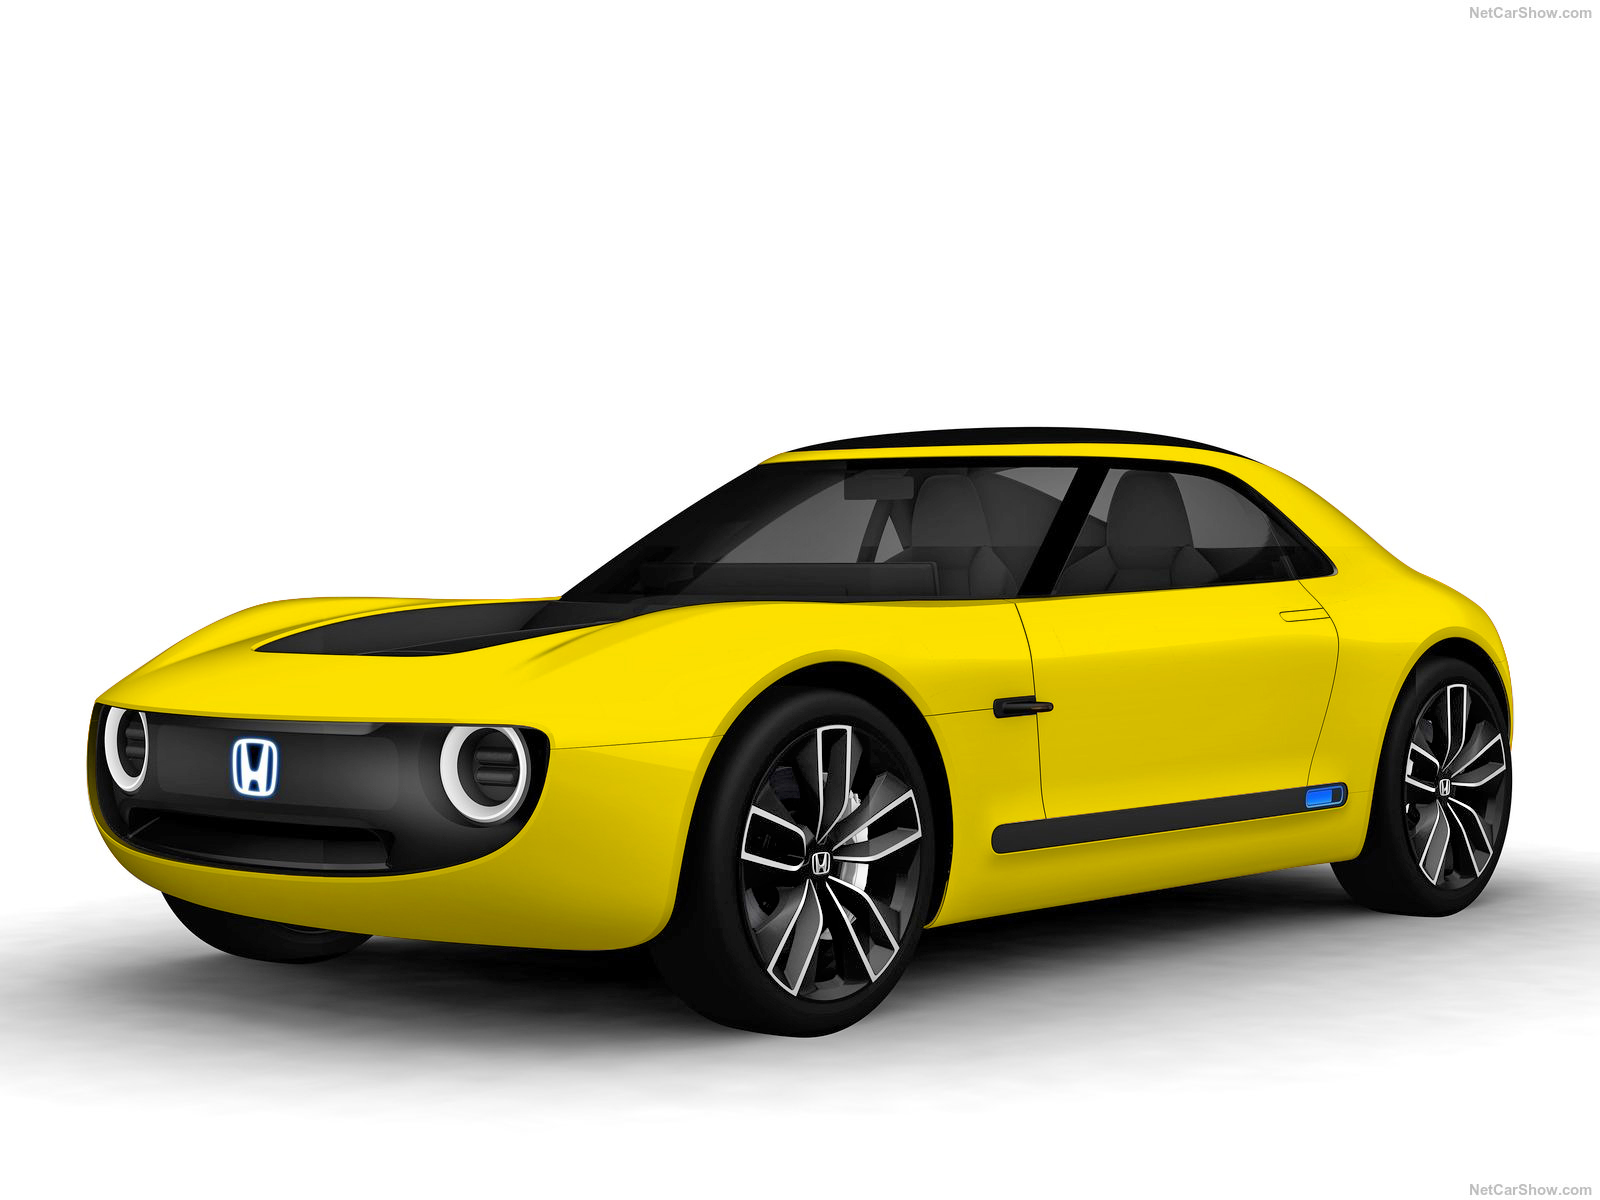 Honda Sports EV concept from 2017 shown for representation